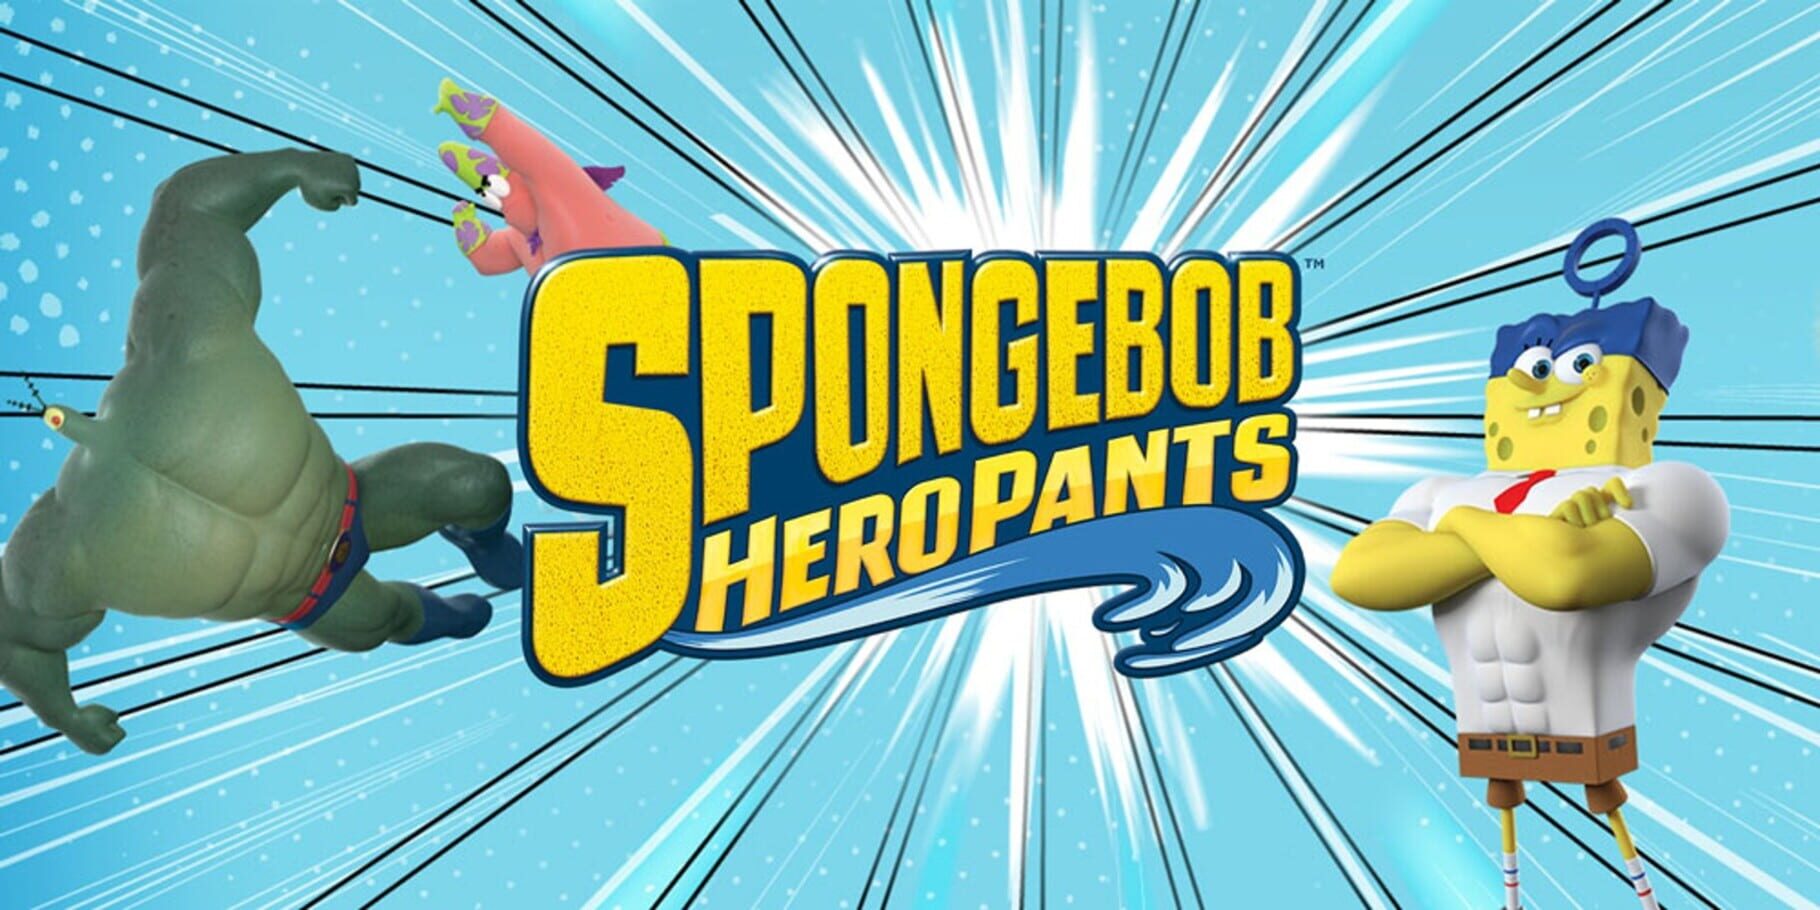 Arte - SpongeBob HeroPants